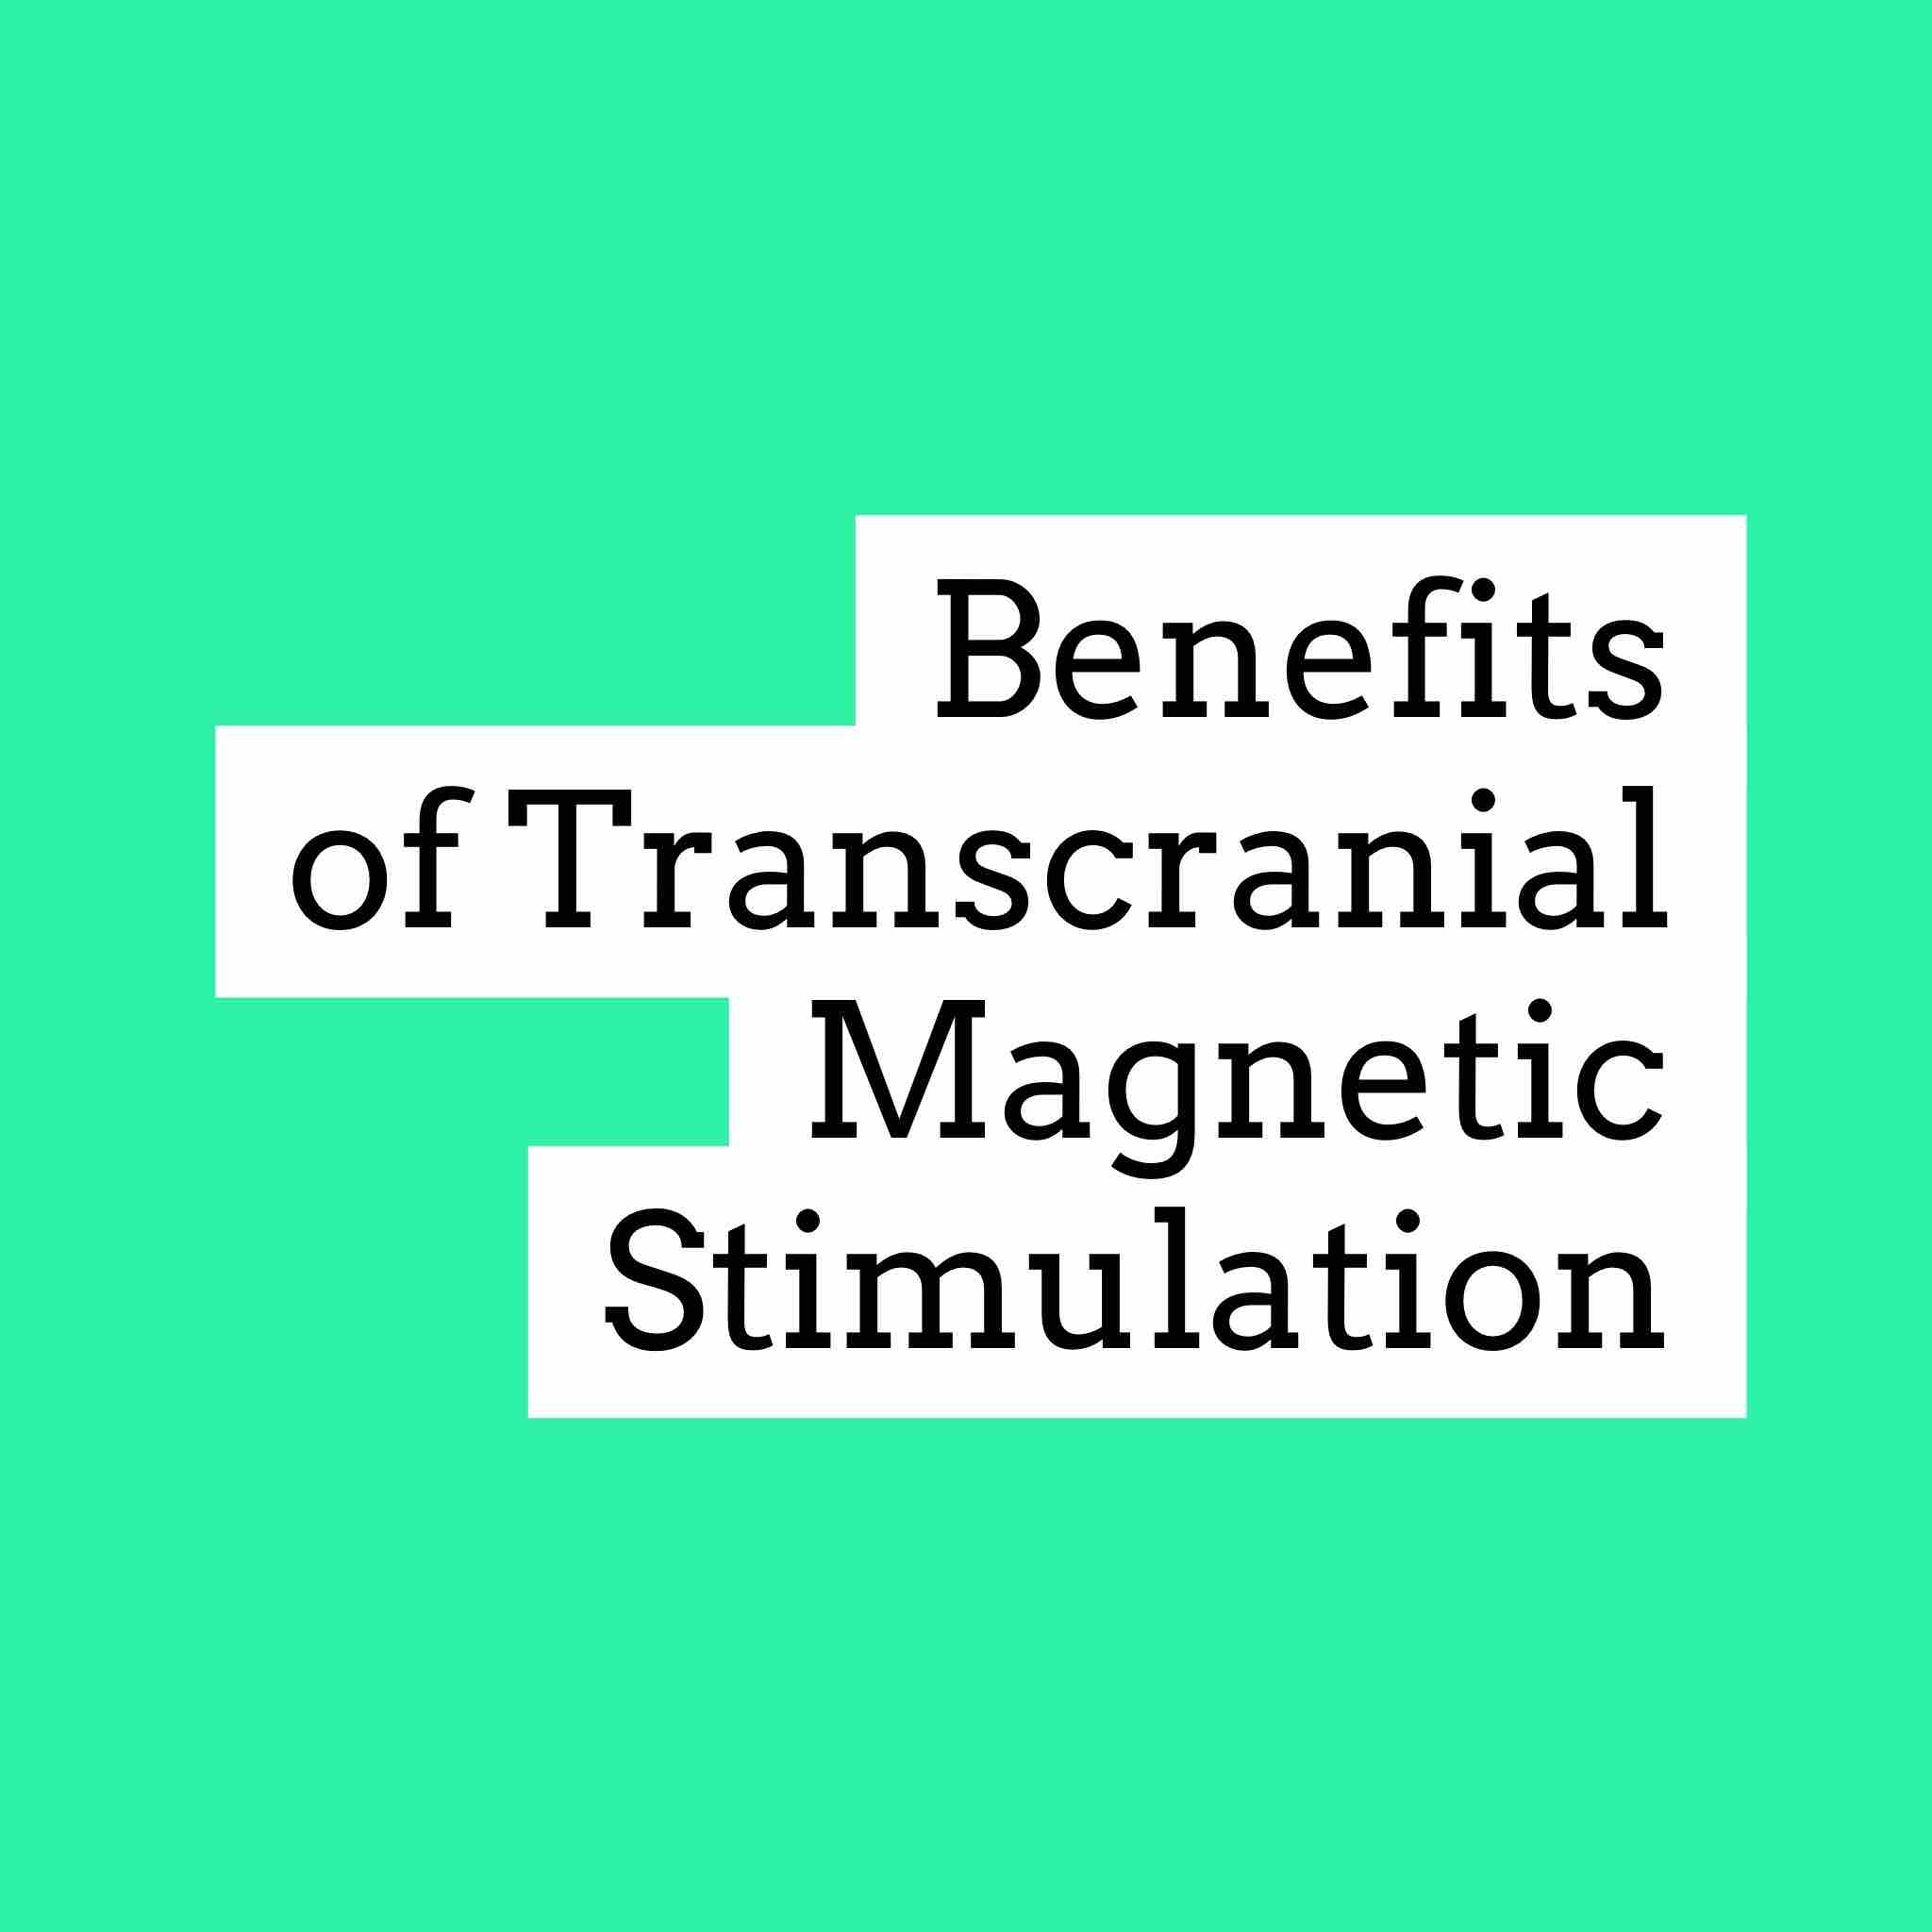 Benefits of transcranial magnetic stimulation